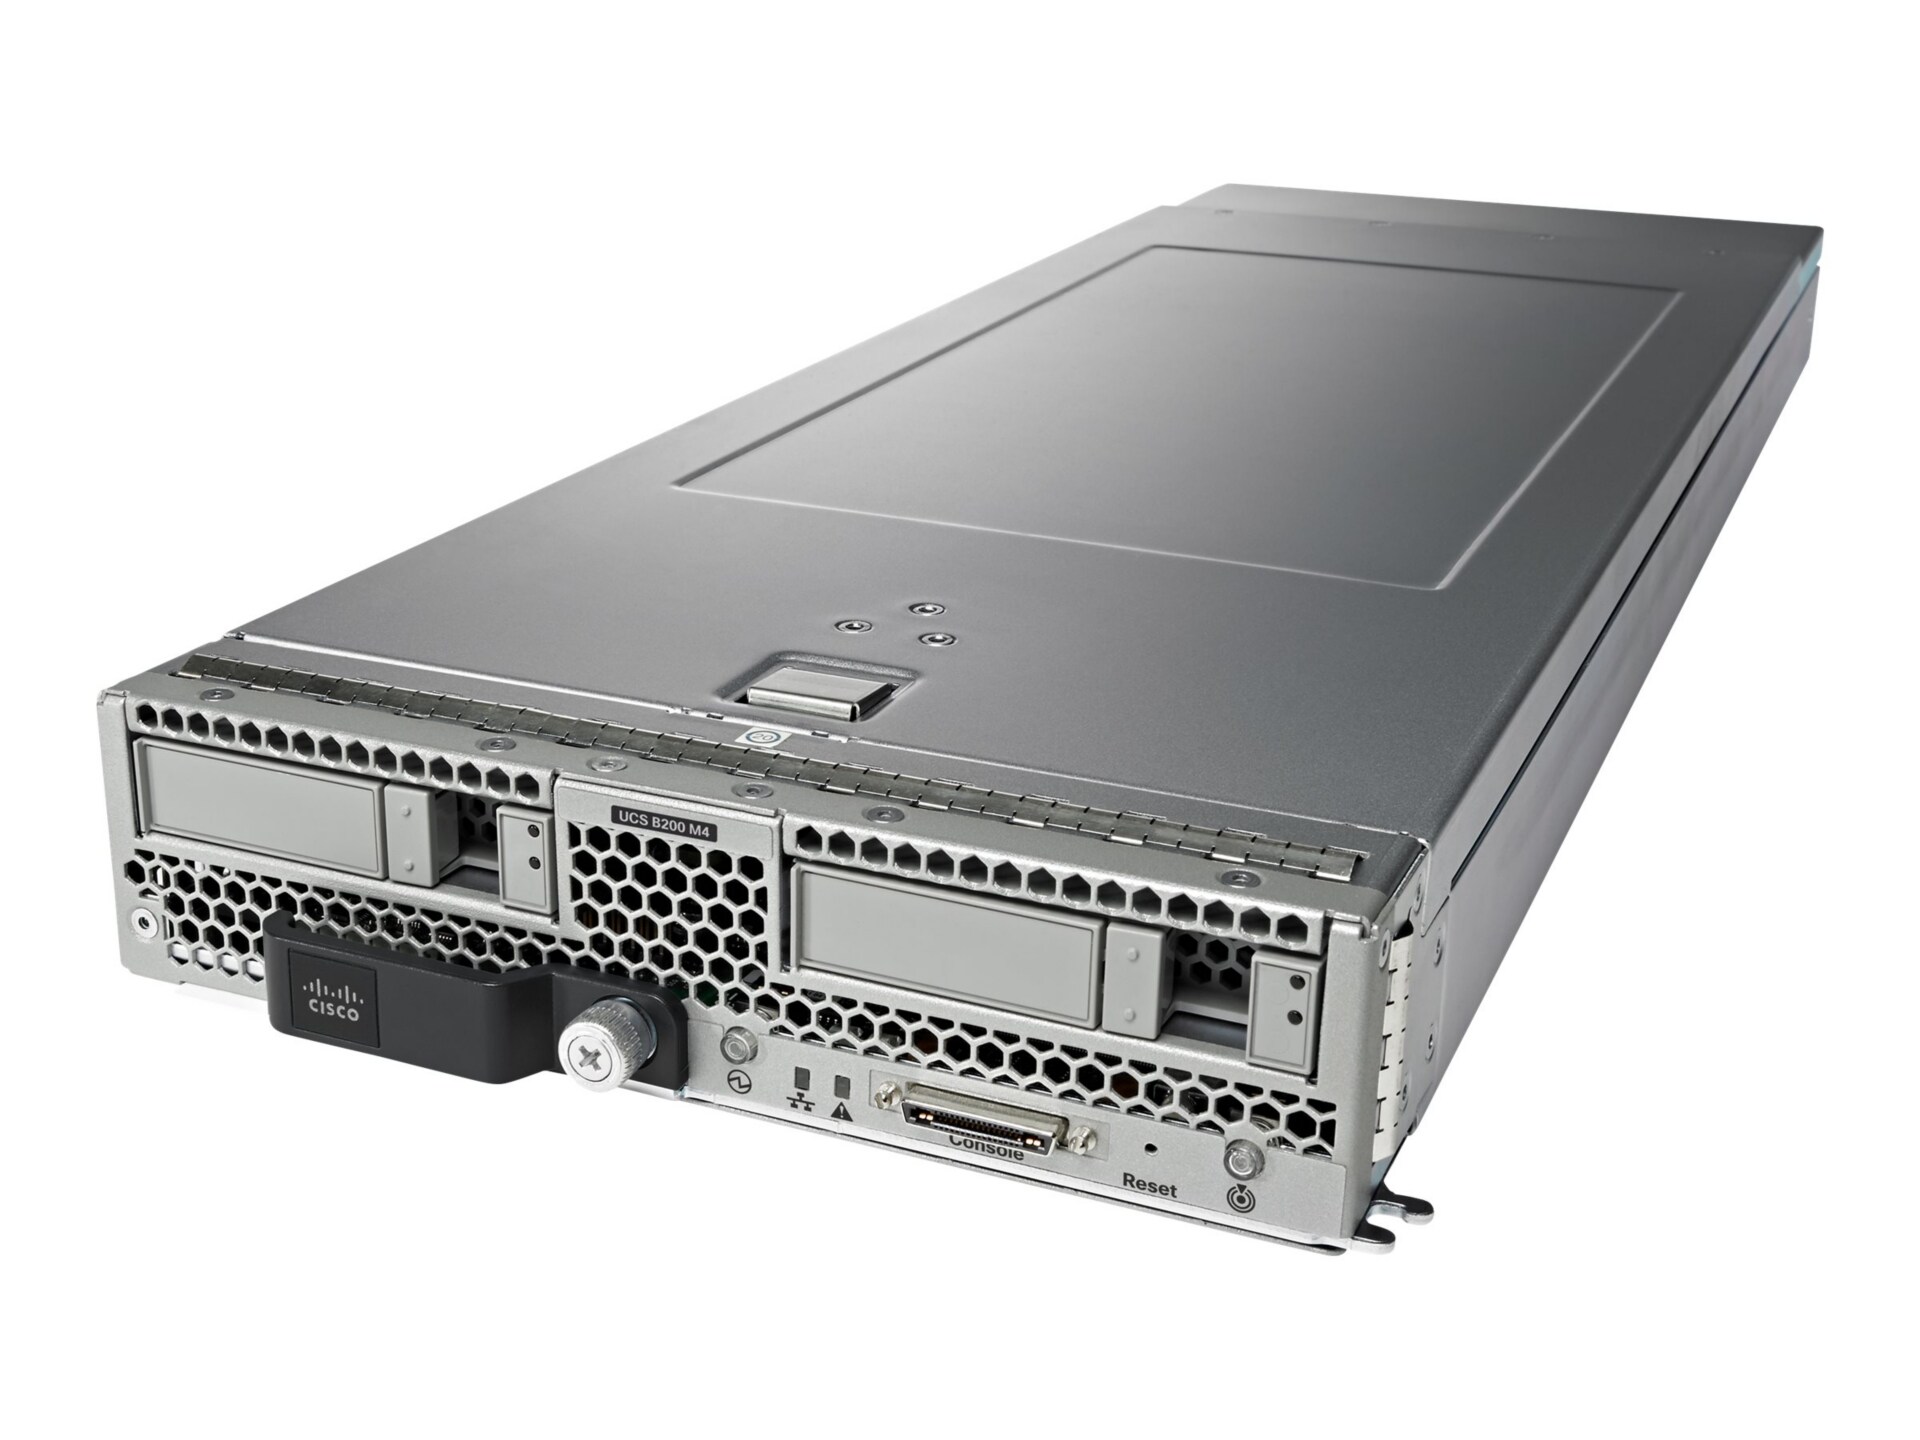 Cisco UCS Smart Play 8 B200 M4 Performance Expansion Pack - blade - Xeon E5